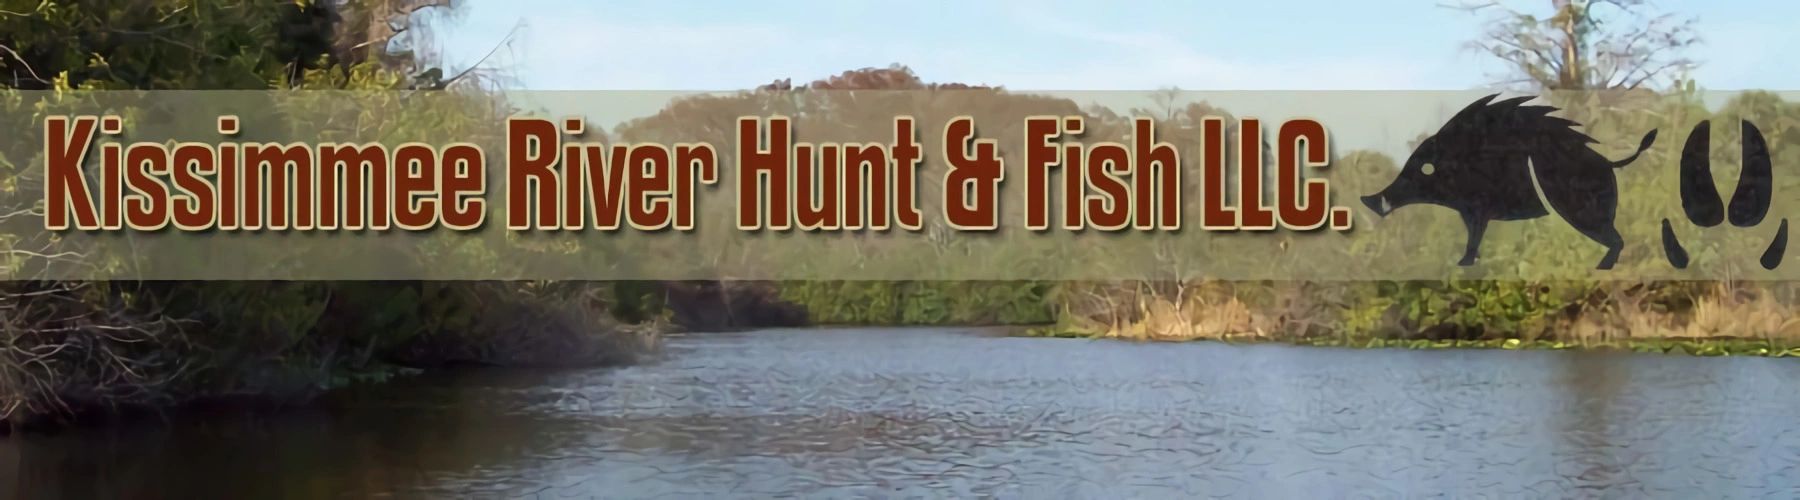 Kissimmee River Hunt & Fish LLC. logo